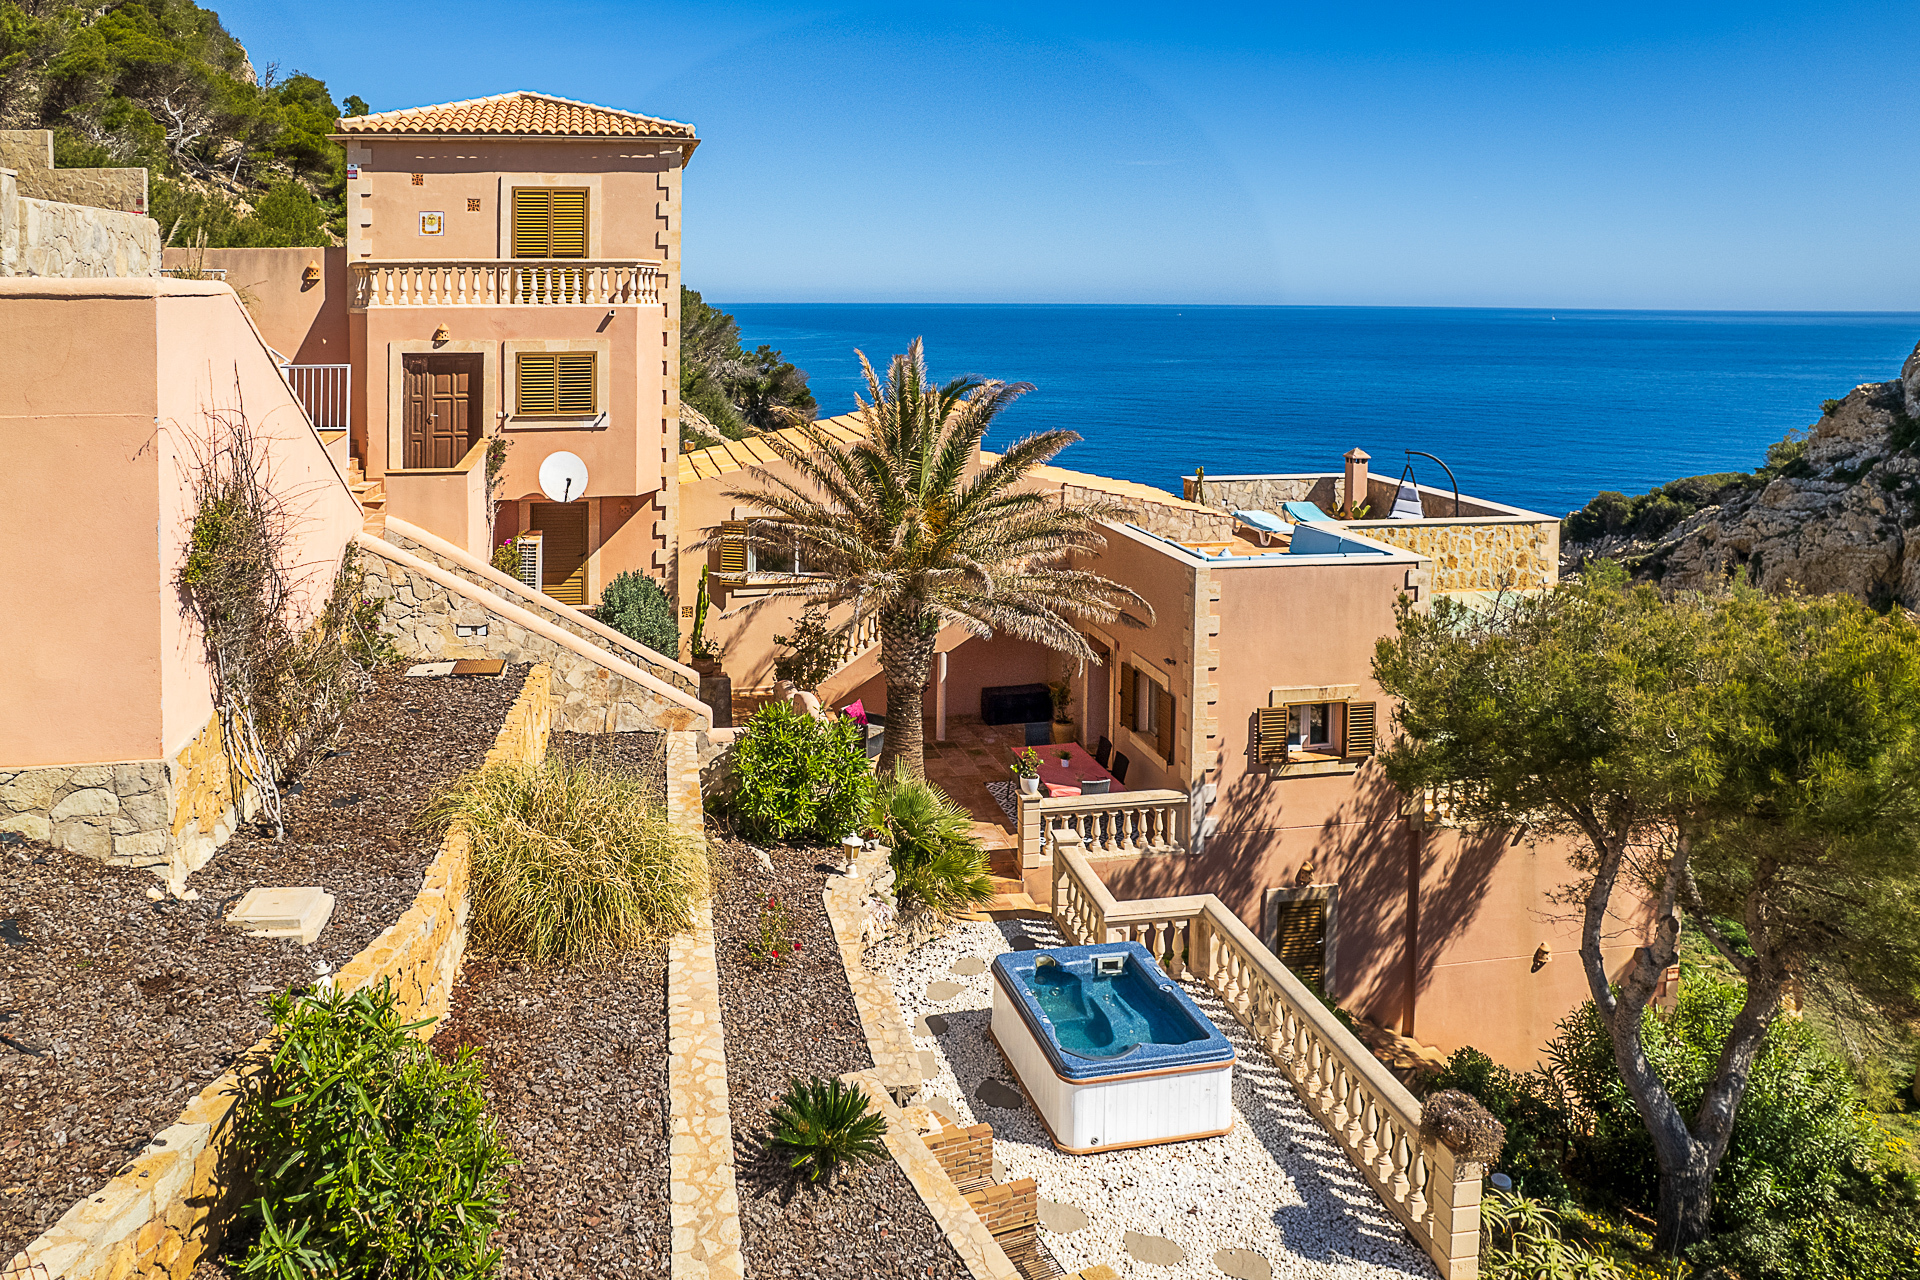 Exclusive villa with breathtaking sea views, 07590 Cala Ratjada (Spain), Detached house